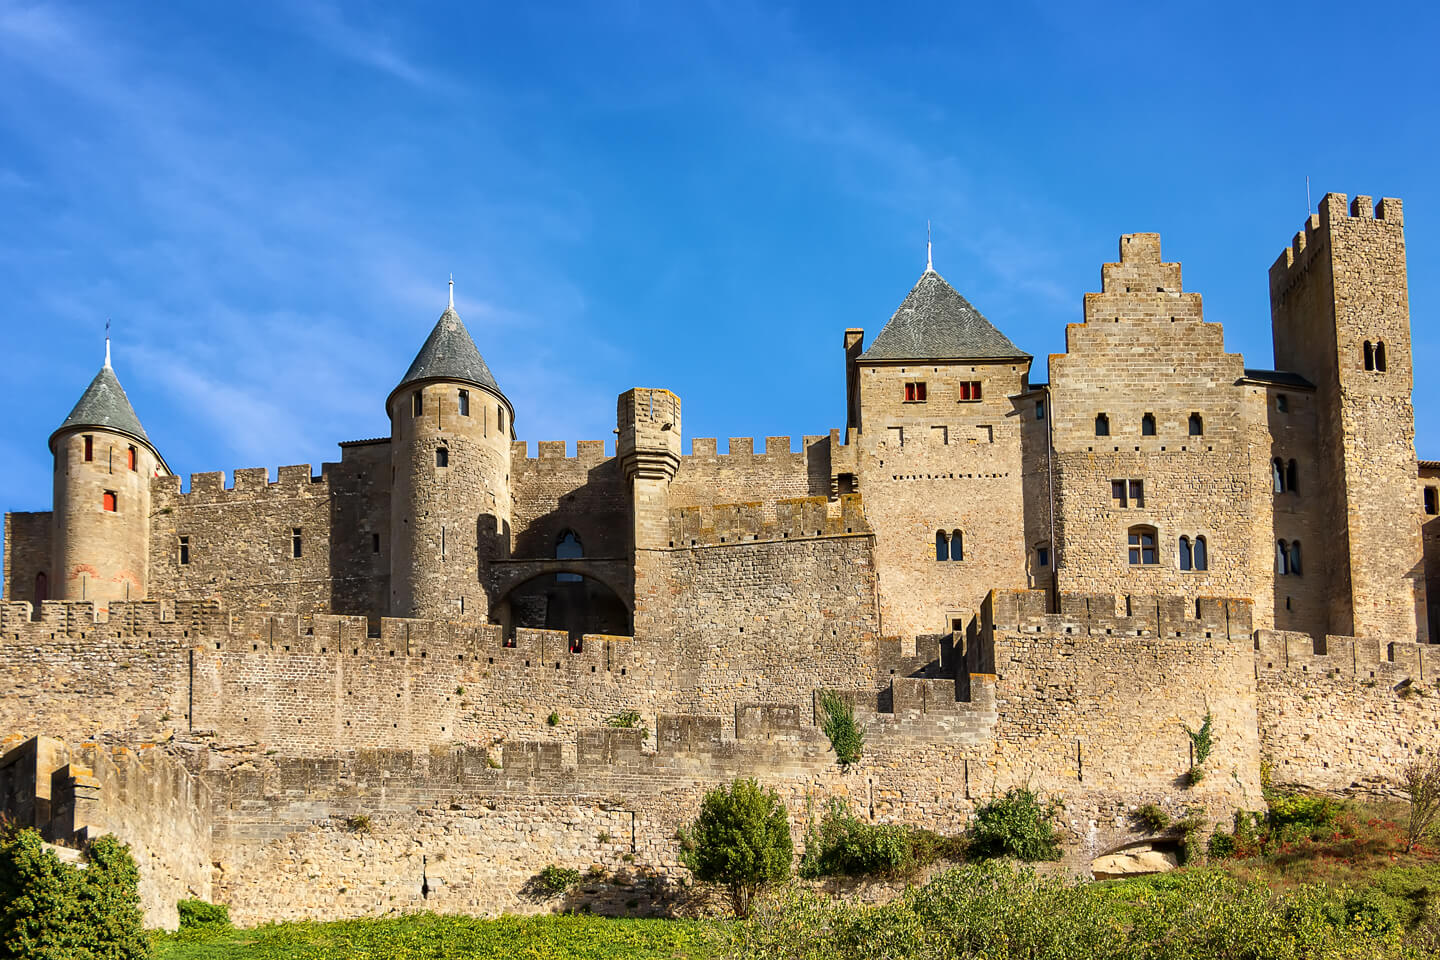 # Carcassonne